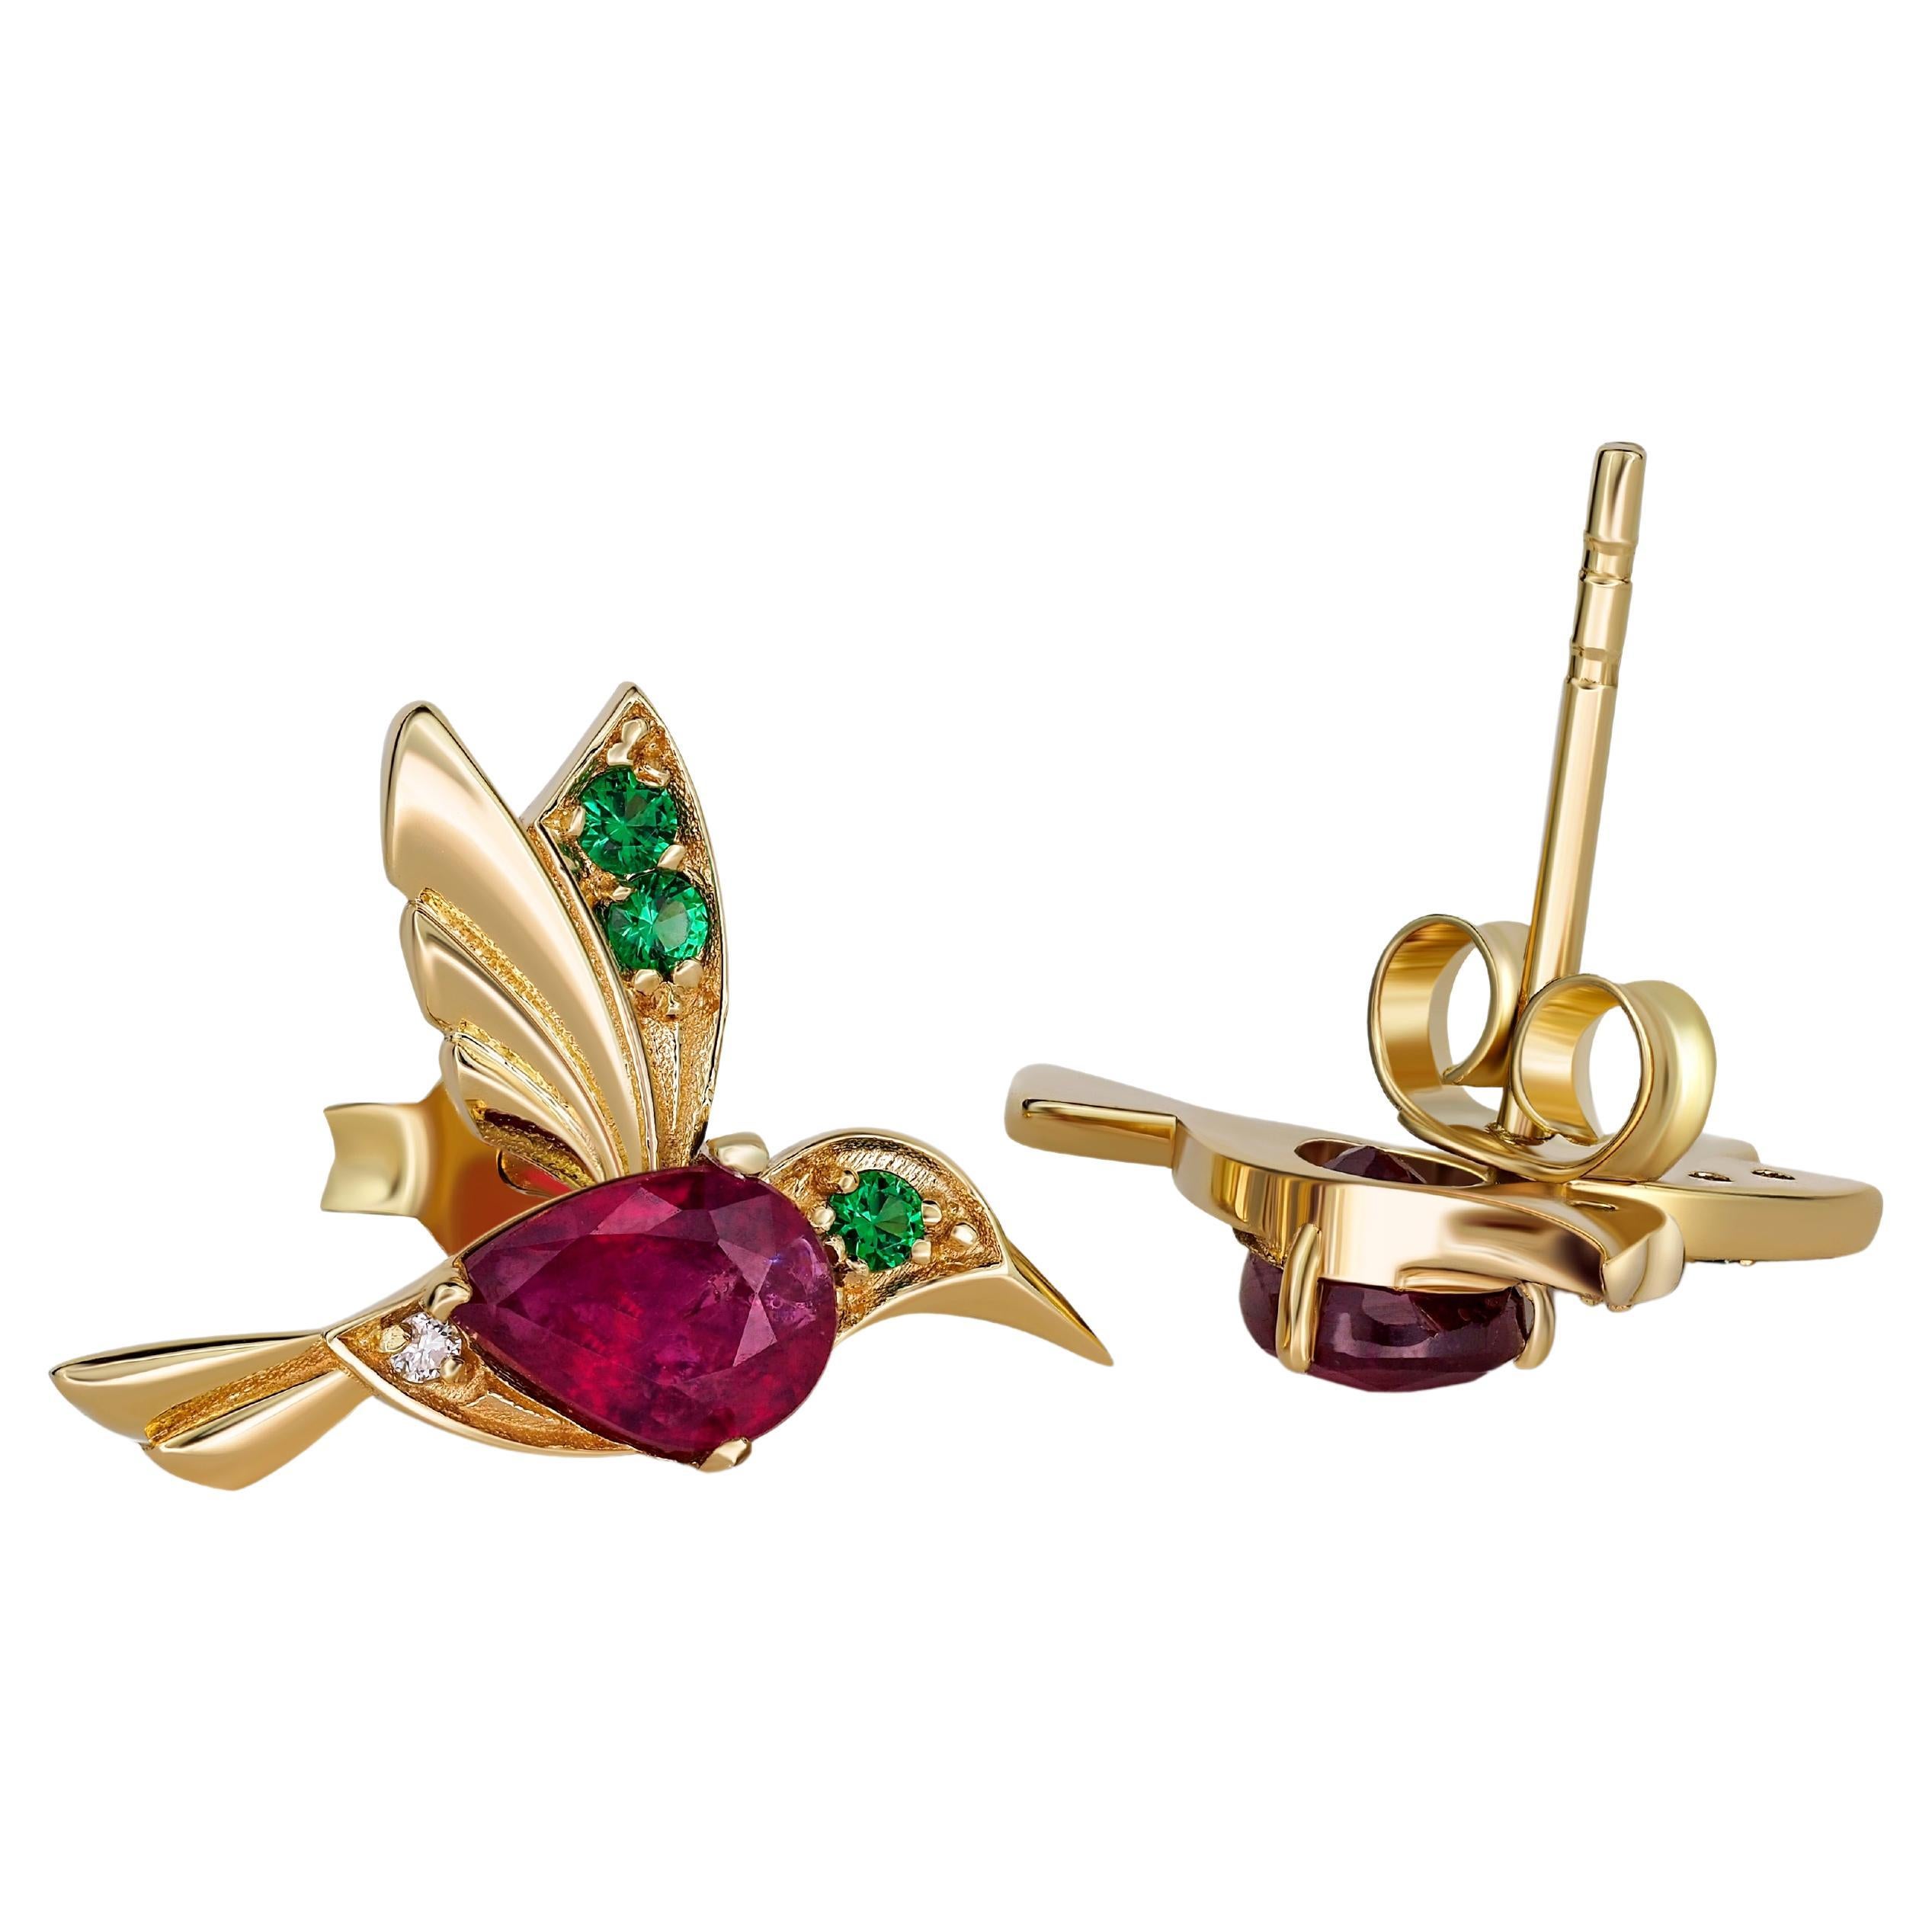 14k Gold Hummingbird Earings Studs with Rubies, Bird Stud Earrings with Gems